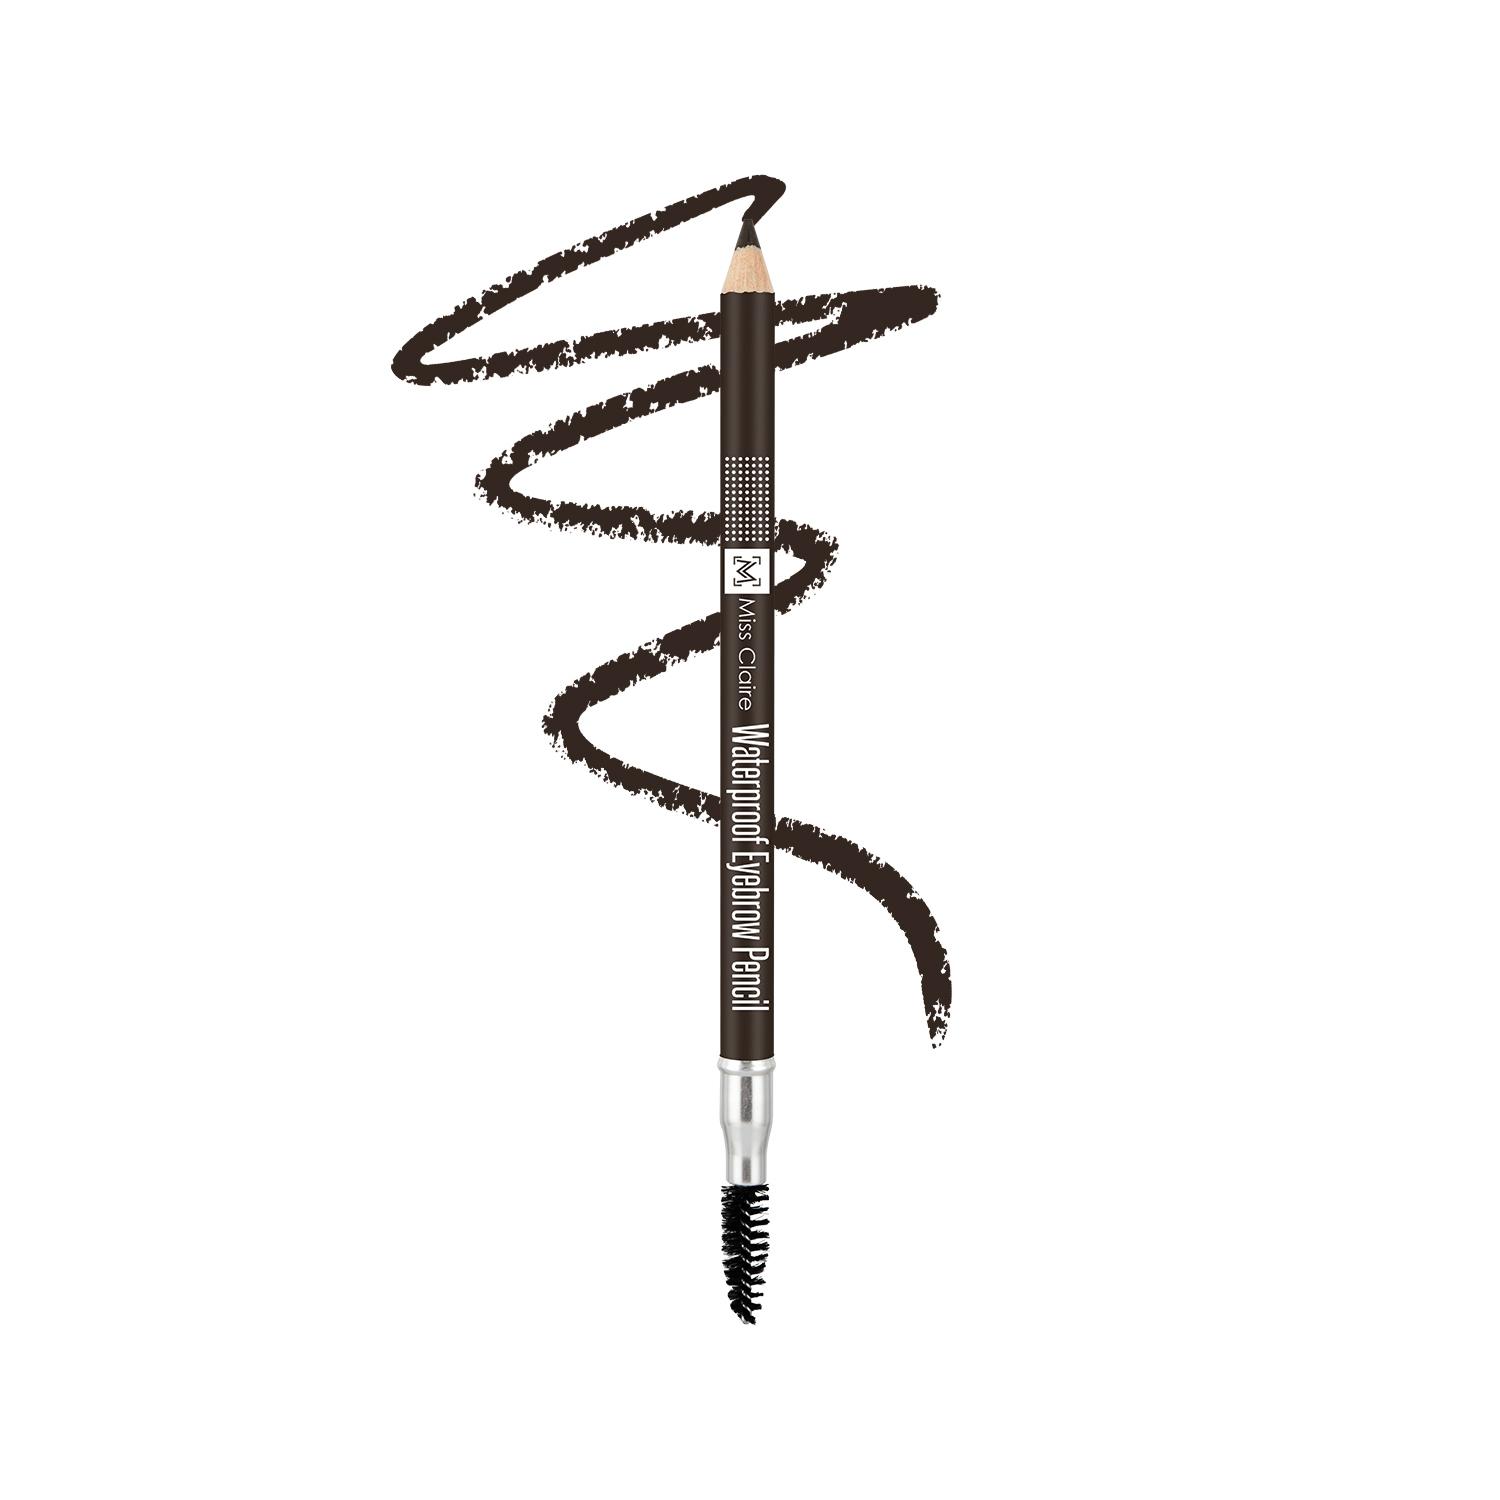 miss claire waterproof eyebrow pencil with mascara brush - 02 dark brown (1.4g)